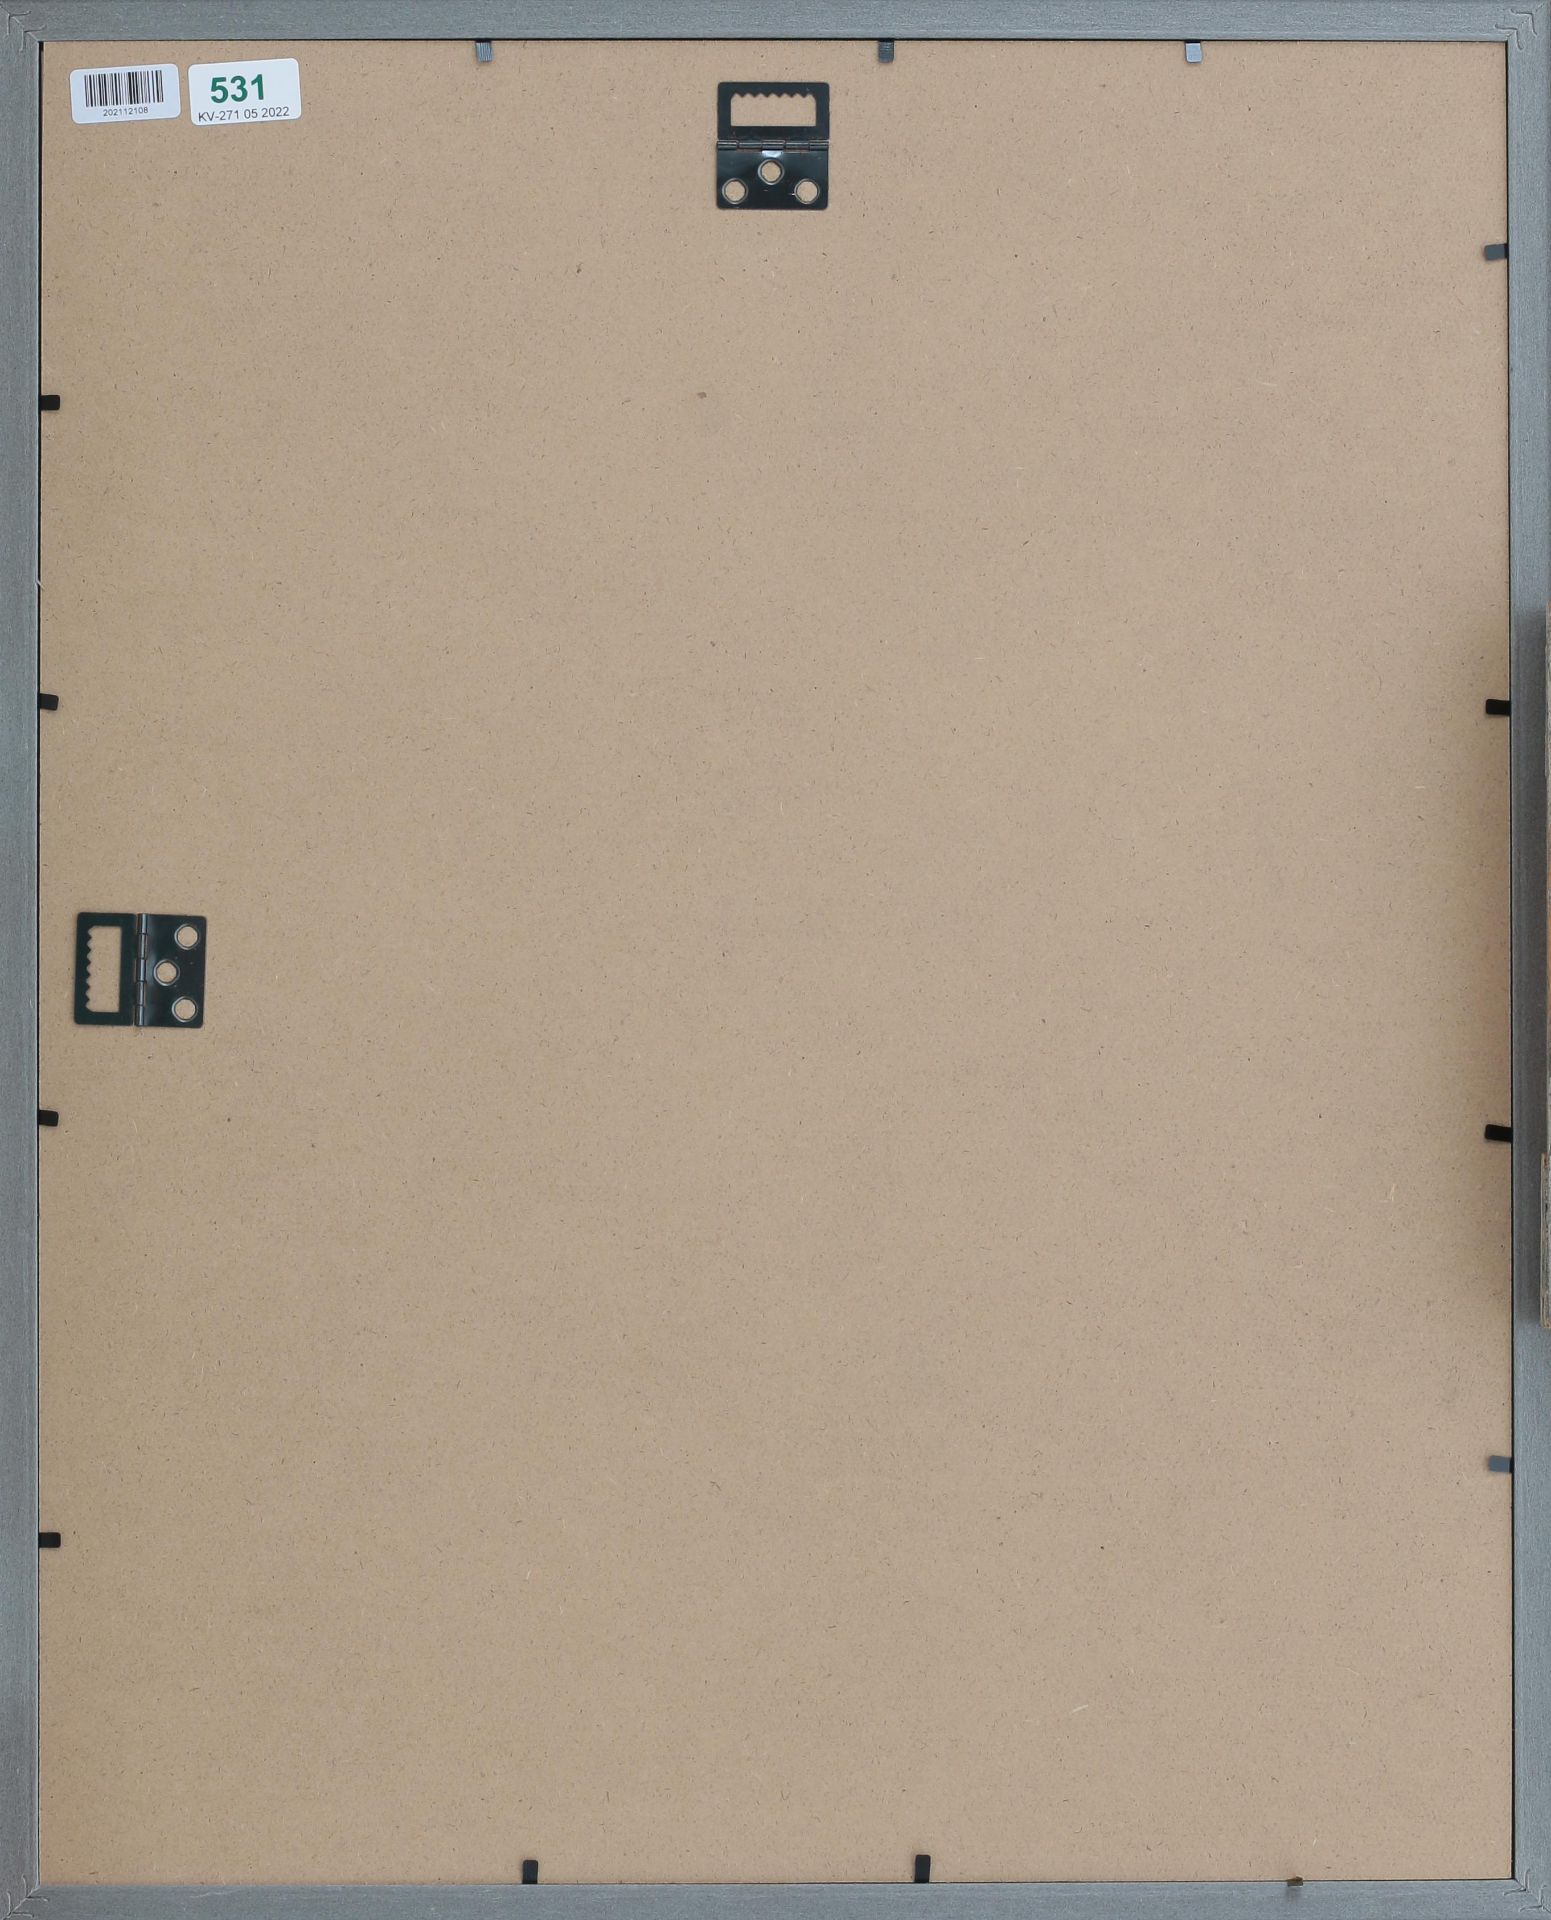 Co Westerik (1924-2018) Untitled. Signed and dated 8 juni 1960 lower right. Inkttekening 29 x 22,5 - Bild 4 aus 4